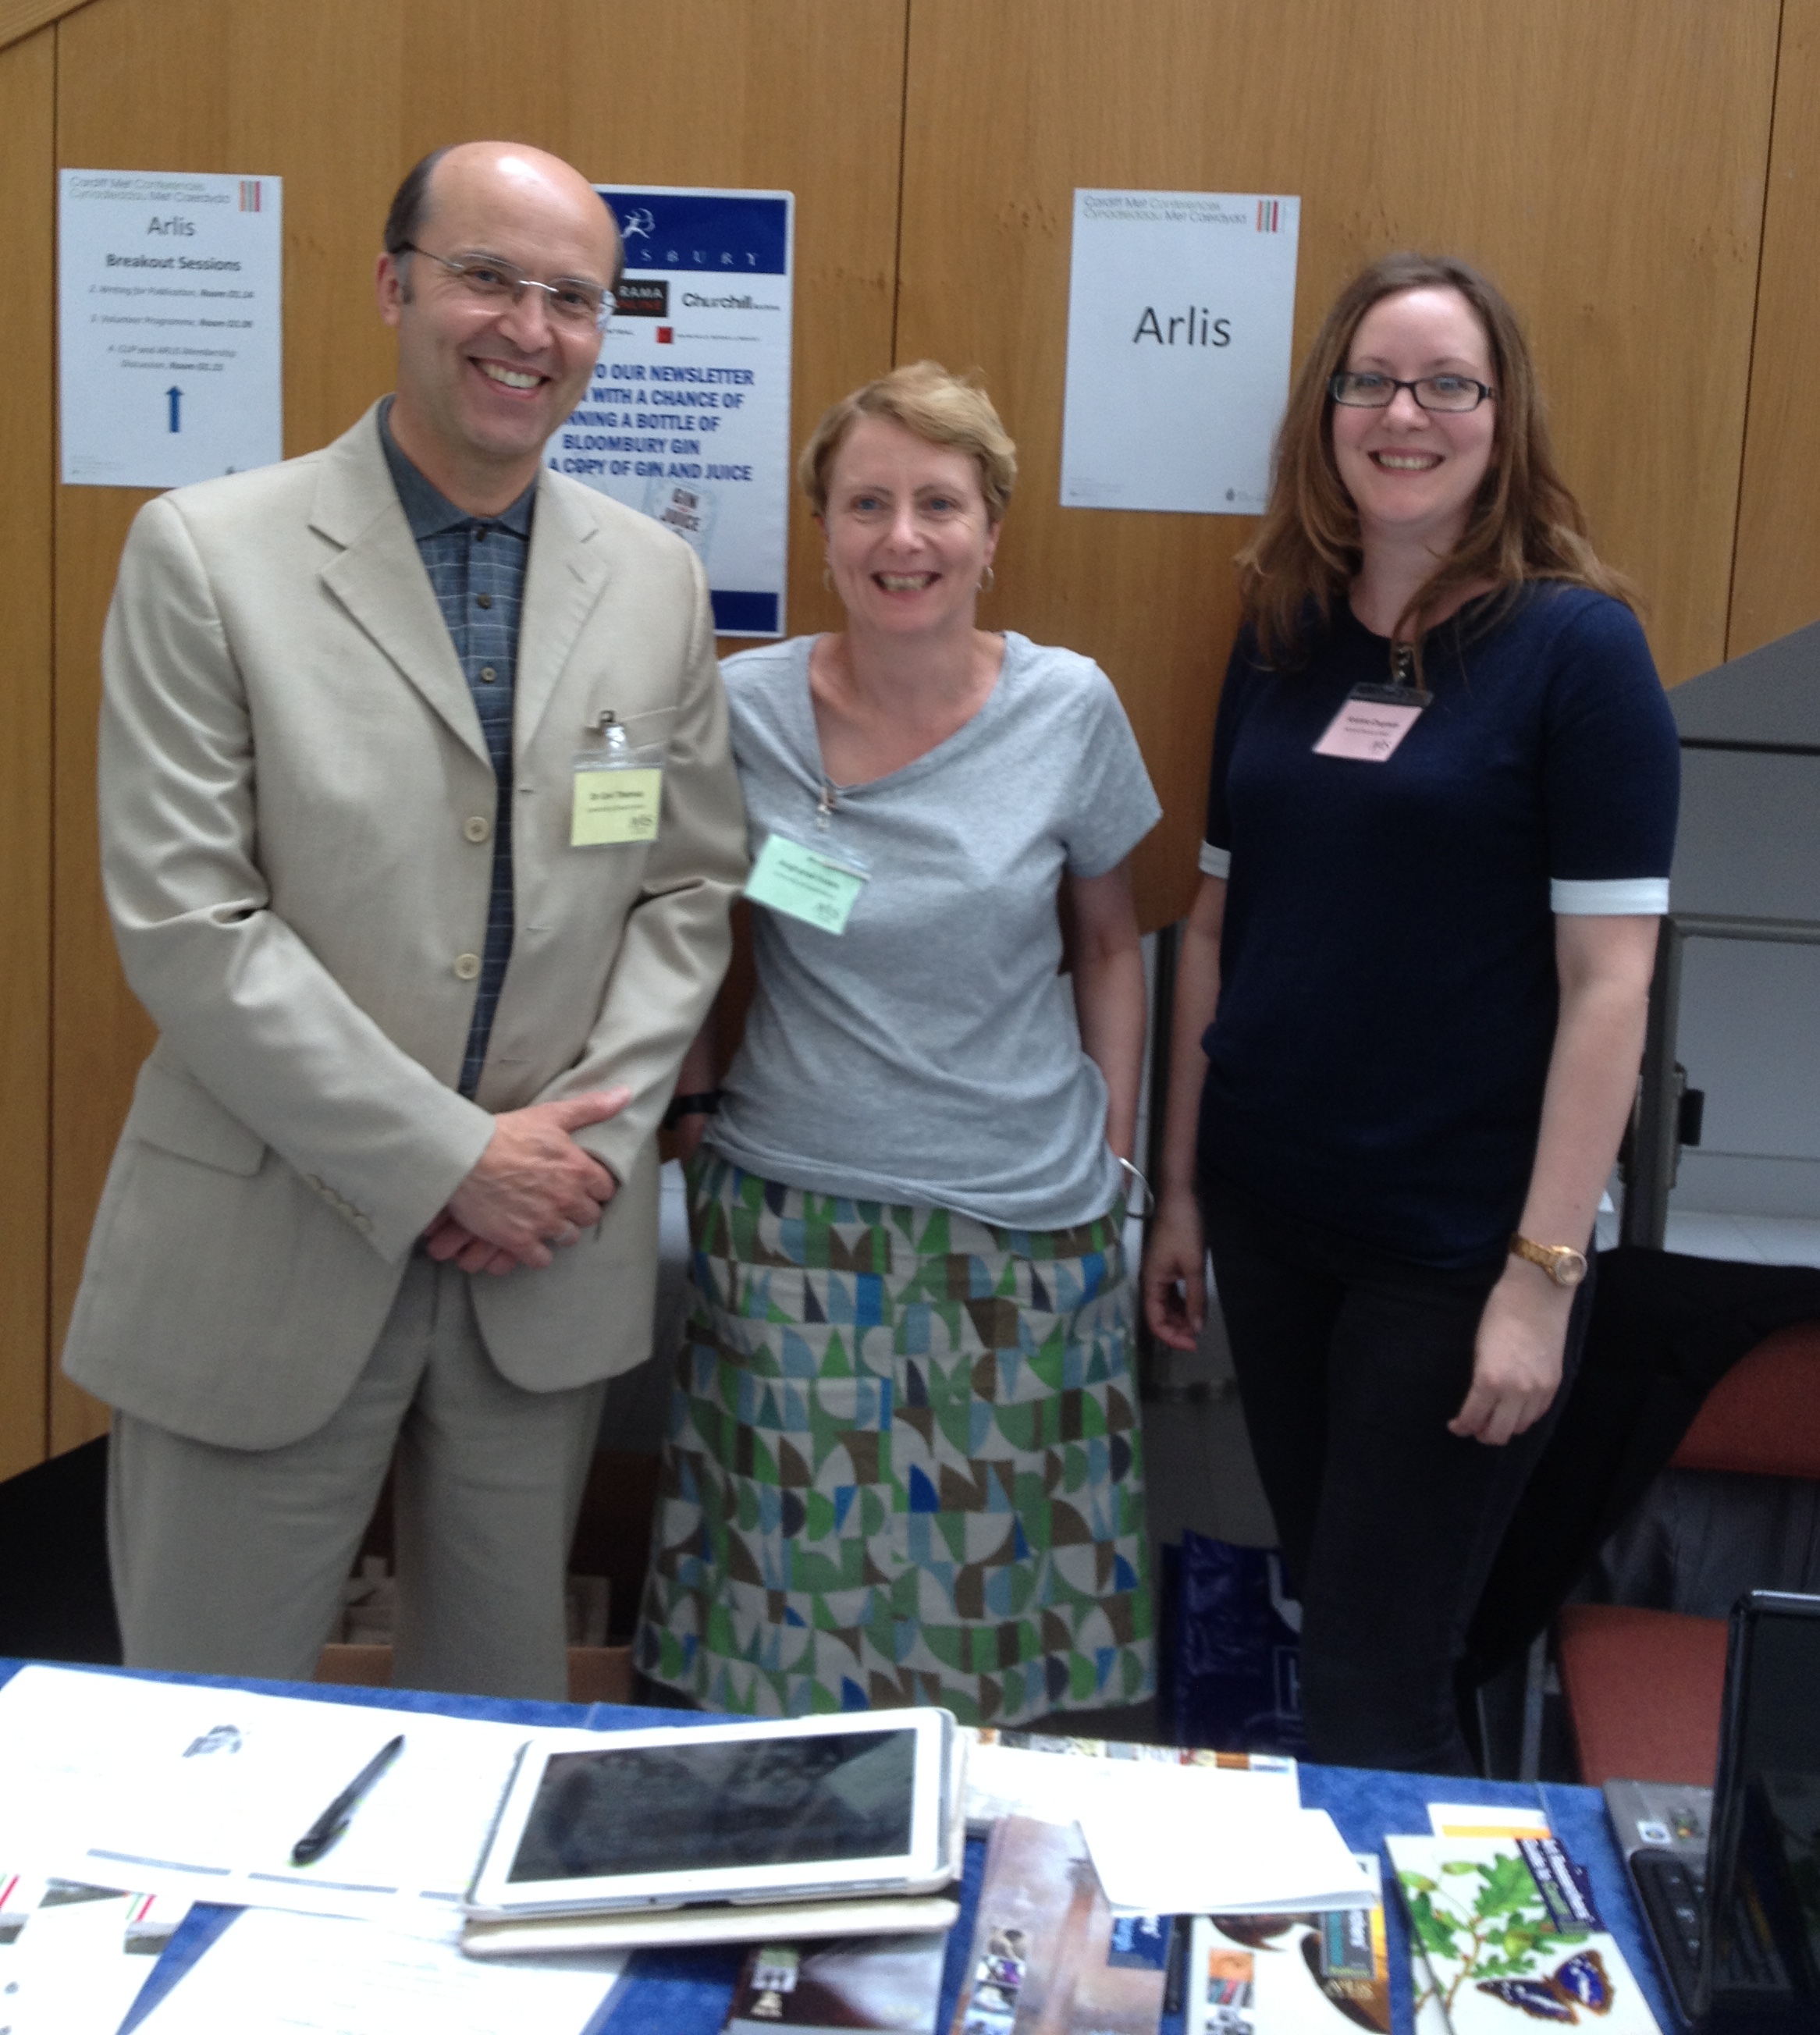 Ceri Thomas, Angharad Evans (USW) and Kristine Chapman (AC-NMW), Arlis conference, Cardiff Metropolitan University 16 July 2015